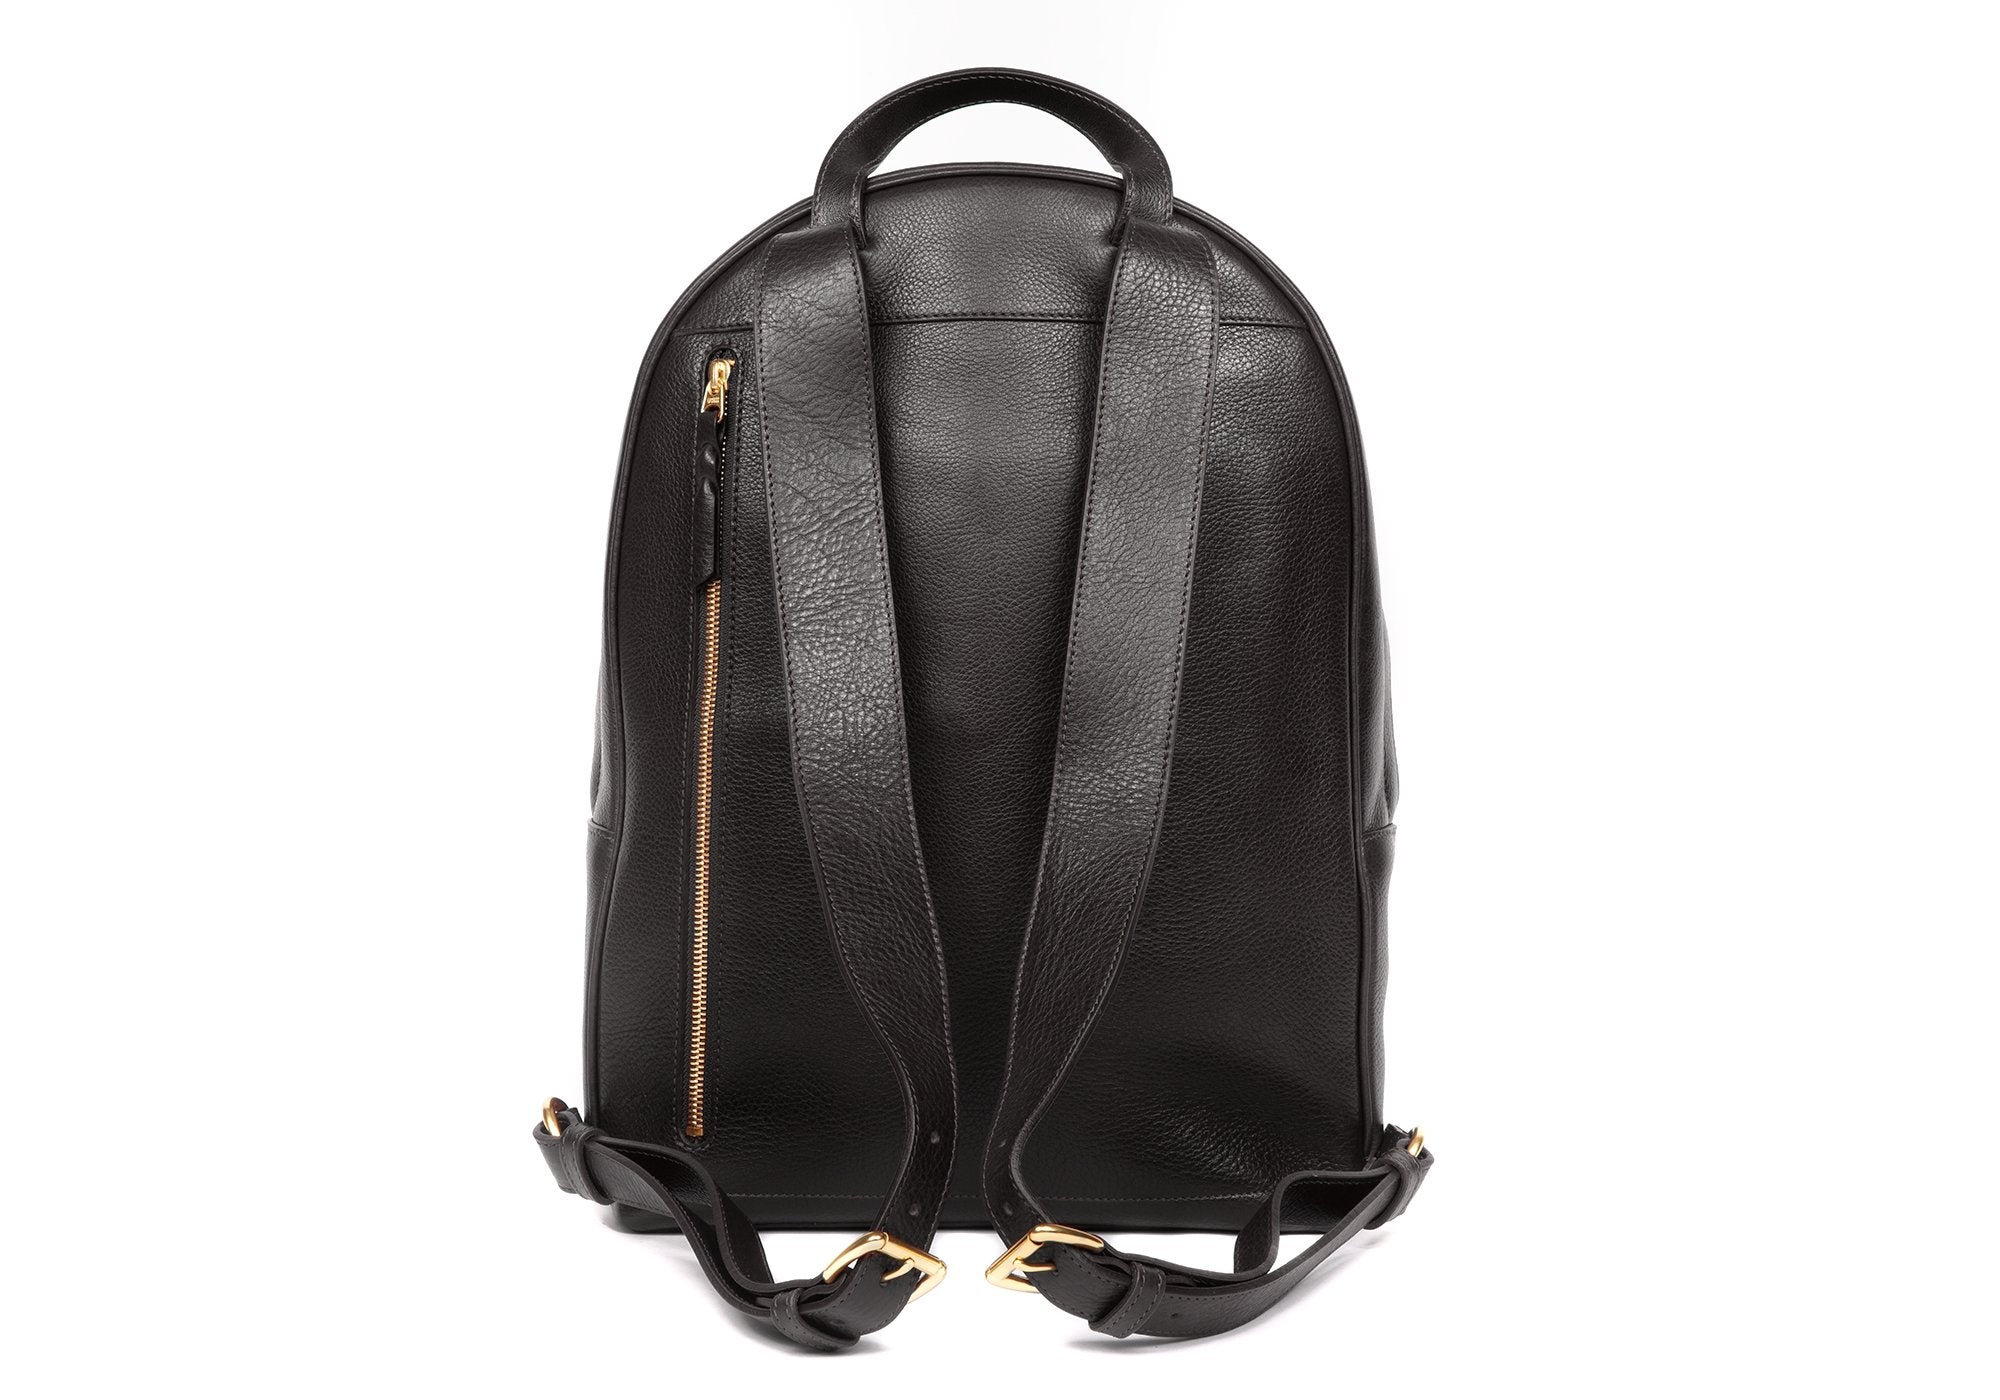 Amazon.com: GAIREG Geometric Square Pattern Backpack Purse for Women Back  Zipper Anti Theft Pocket Design Fashion Travel Hiking Bag : Clothing, Shoes  & Jewelry